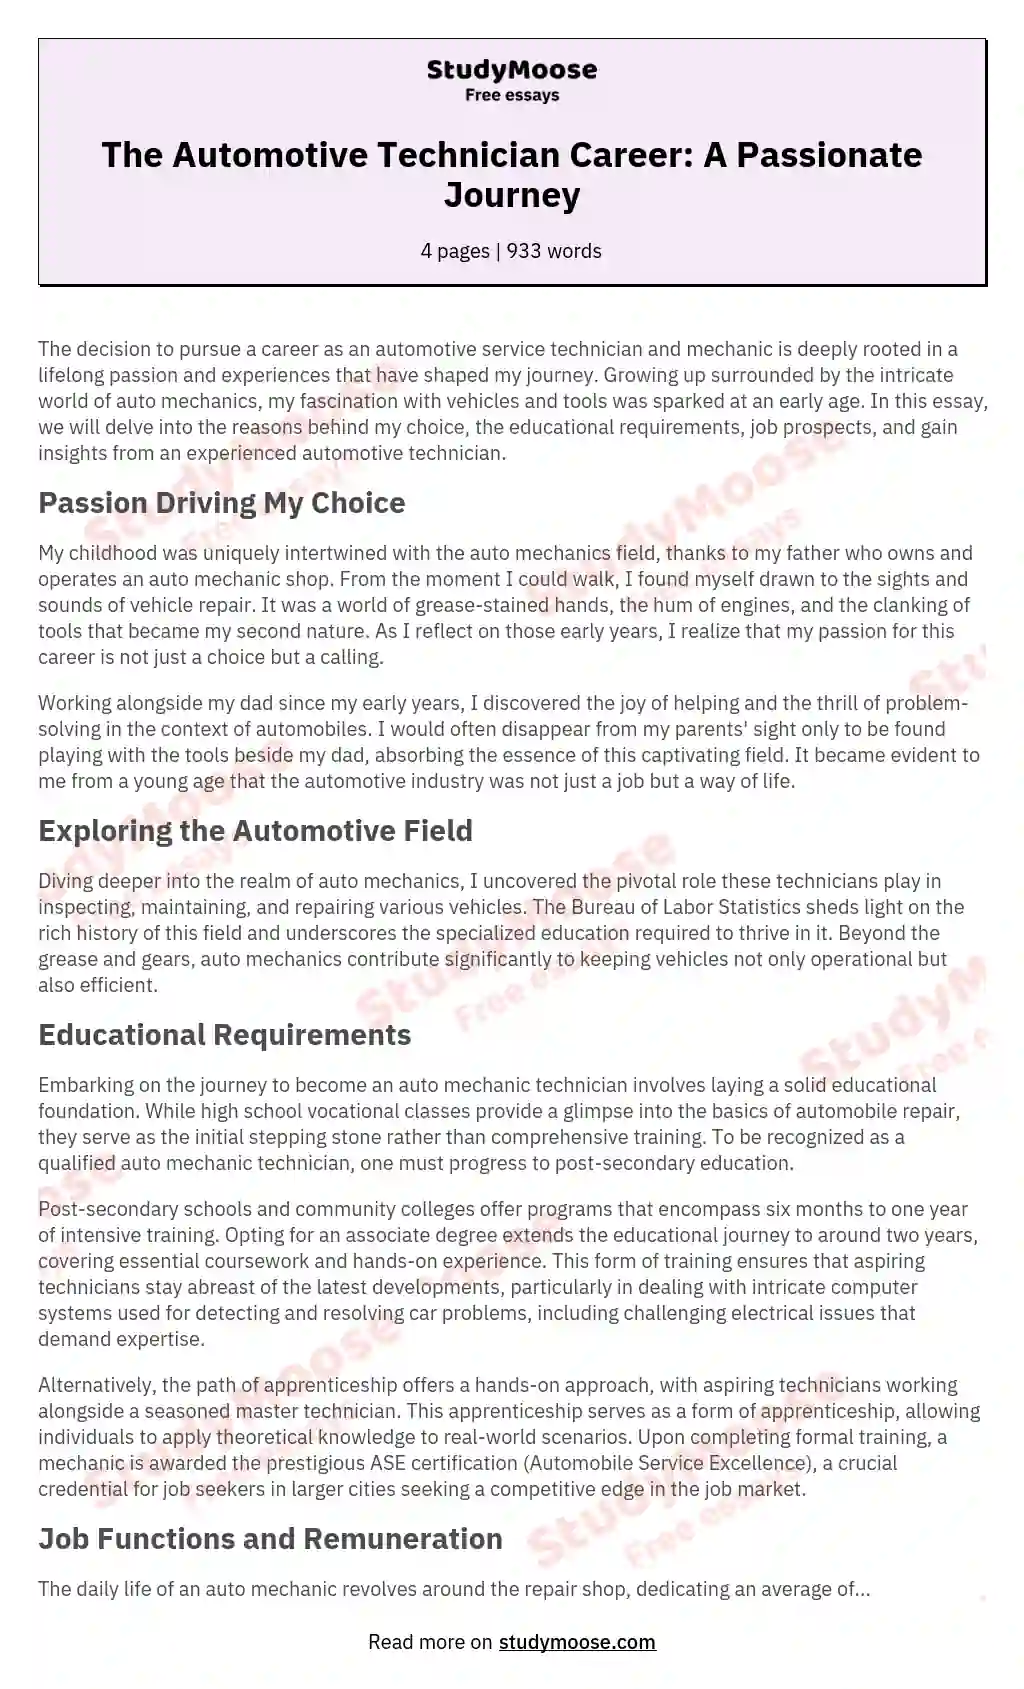 The Automotive Technician Career: A Passionate Journey essay